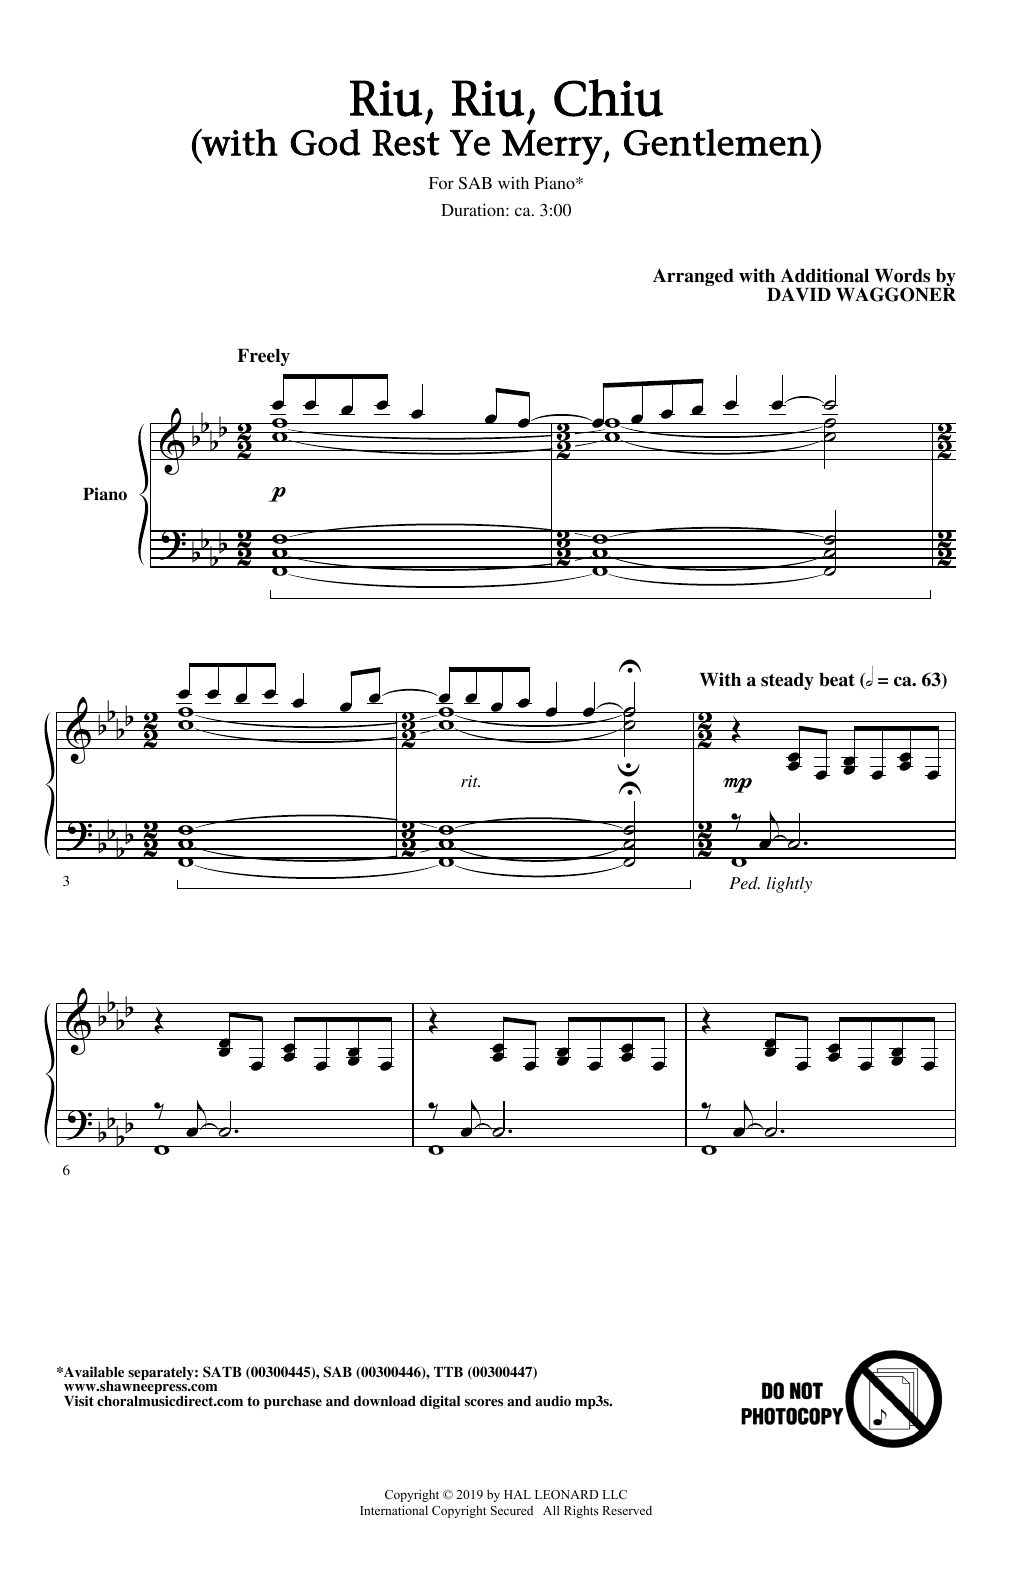 Traditional Carol Riu, Riu, Chiu (with God Rest Ye Merry, Gentlemen) (arr. David Waggoner) Sheet Music Notes & Chords for SAB Choir - Download or Print PDF